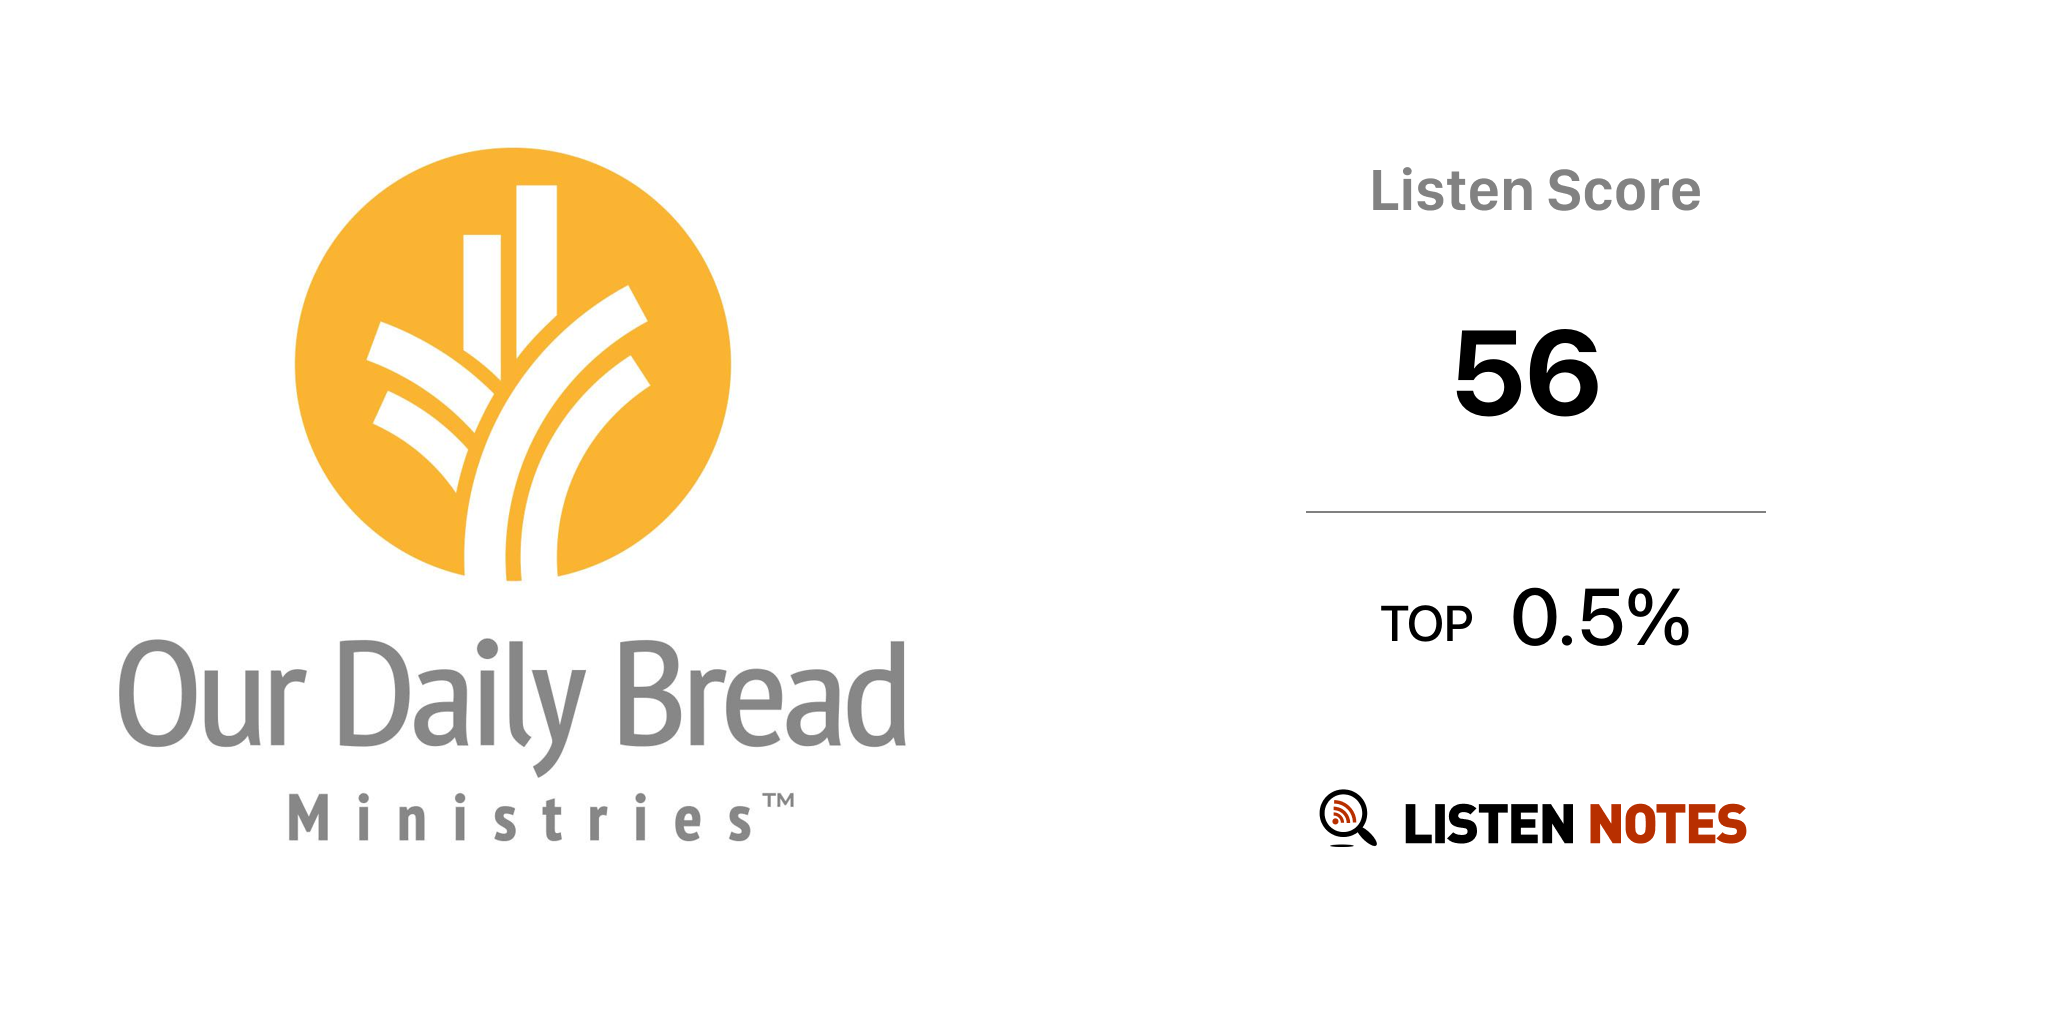 Our Daily Bread Podcast Our Daily Bread Our Daily Bread Ministries